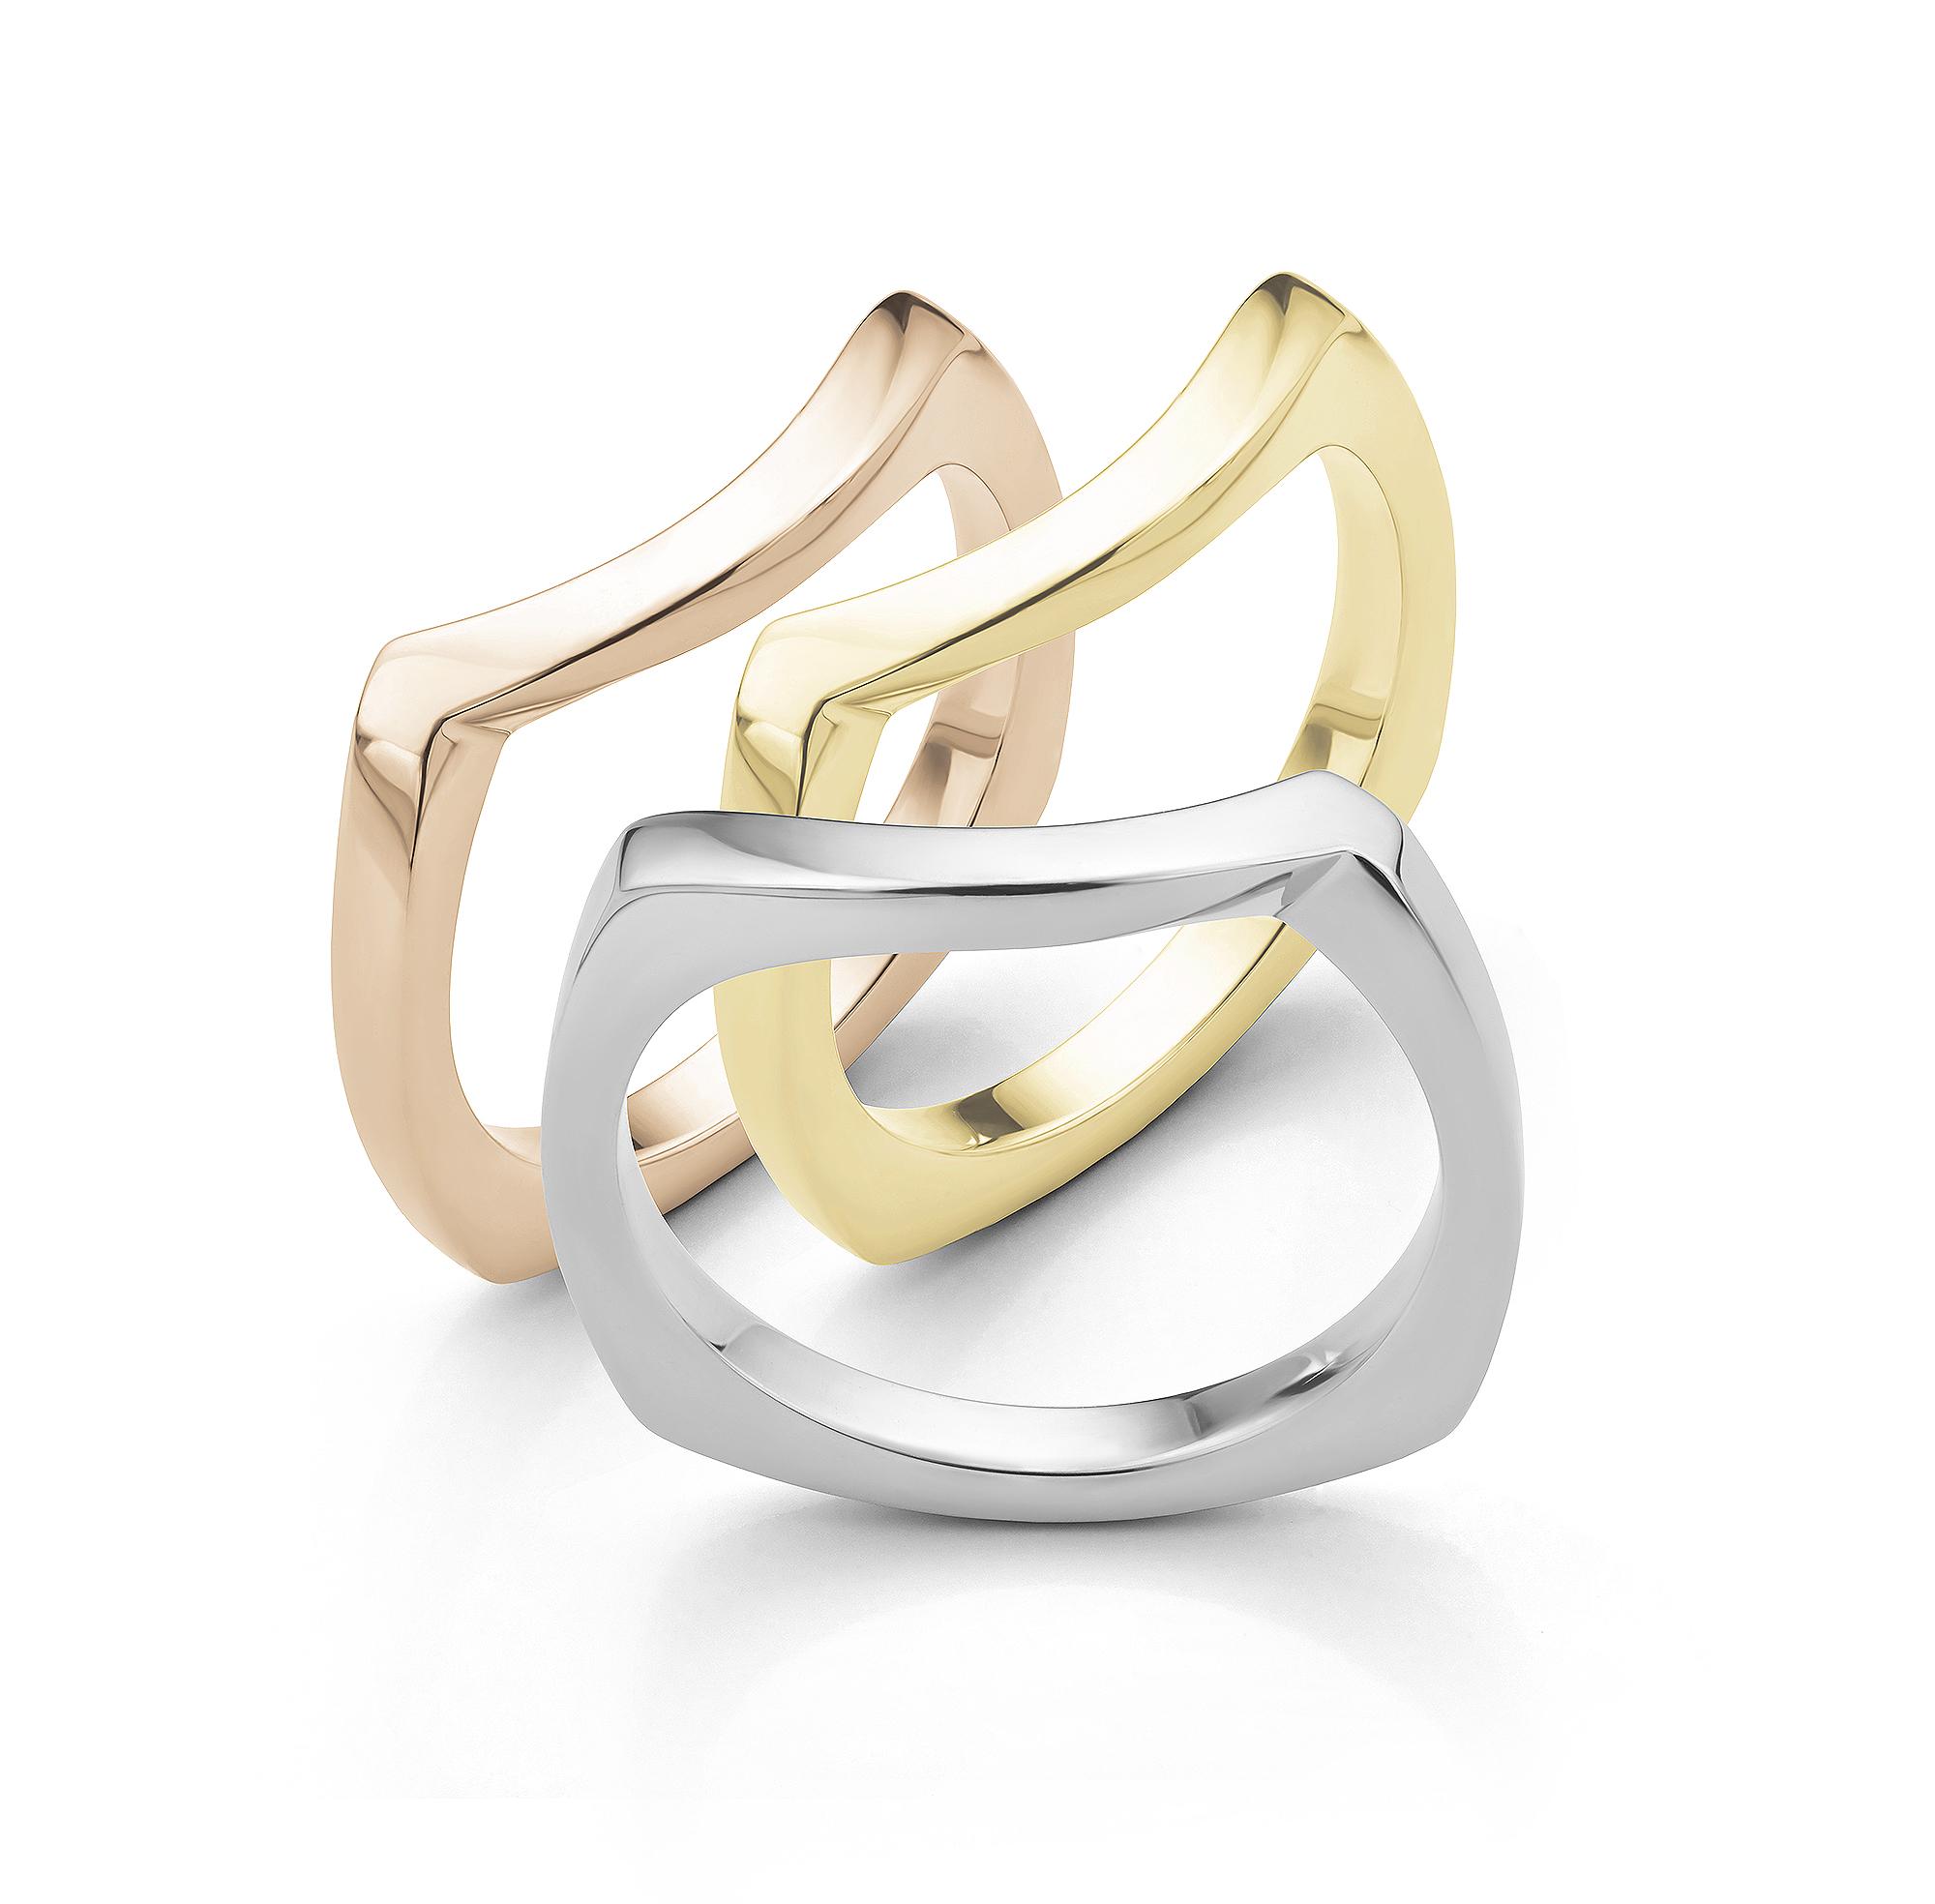 Shaped wedding rings Serendipity Diamonds Ryde 01983 567283